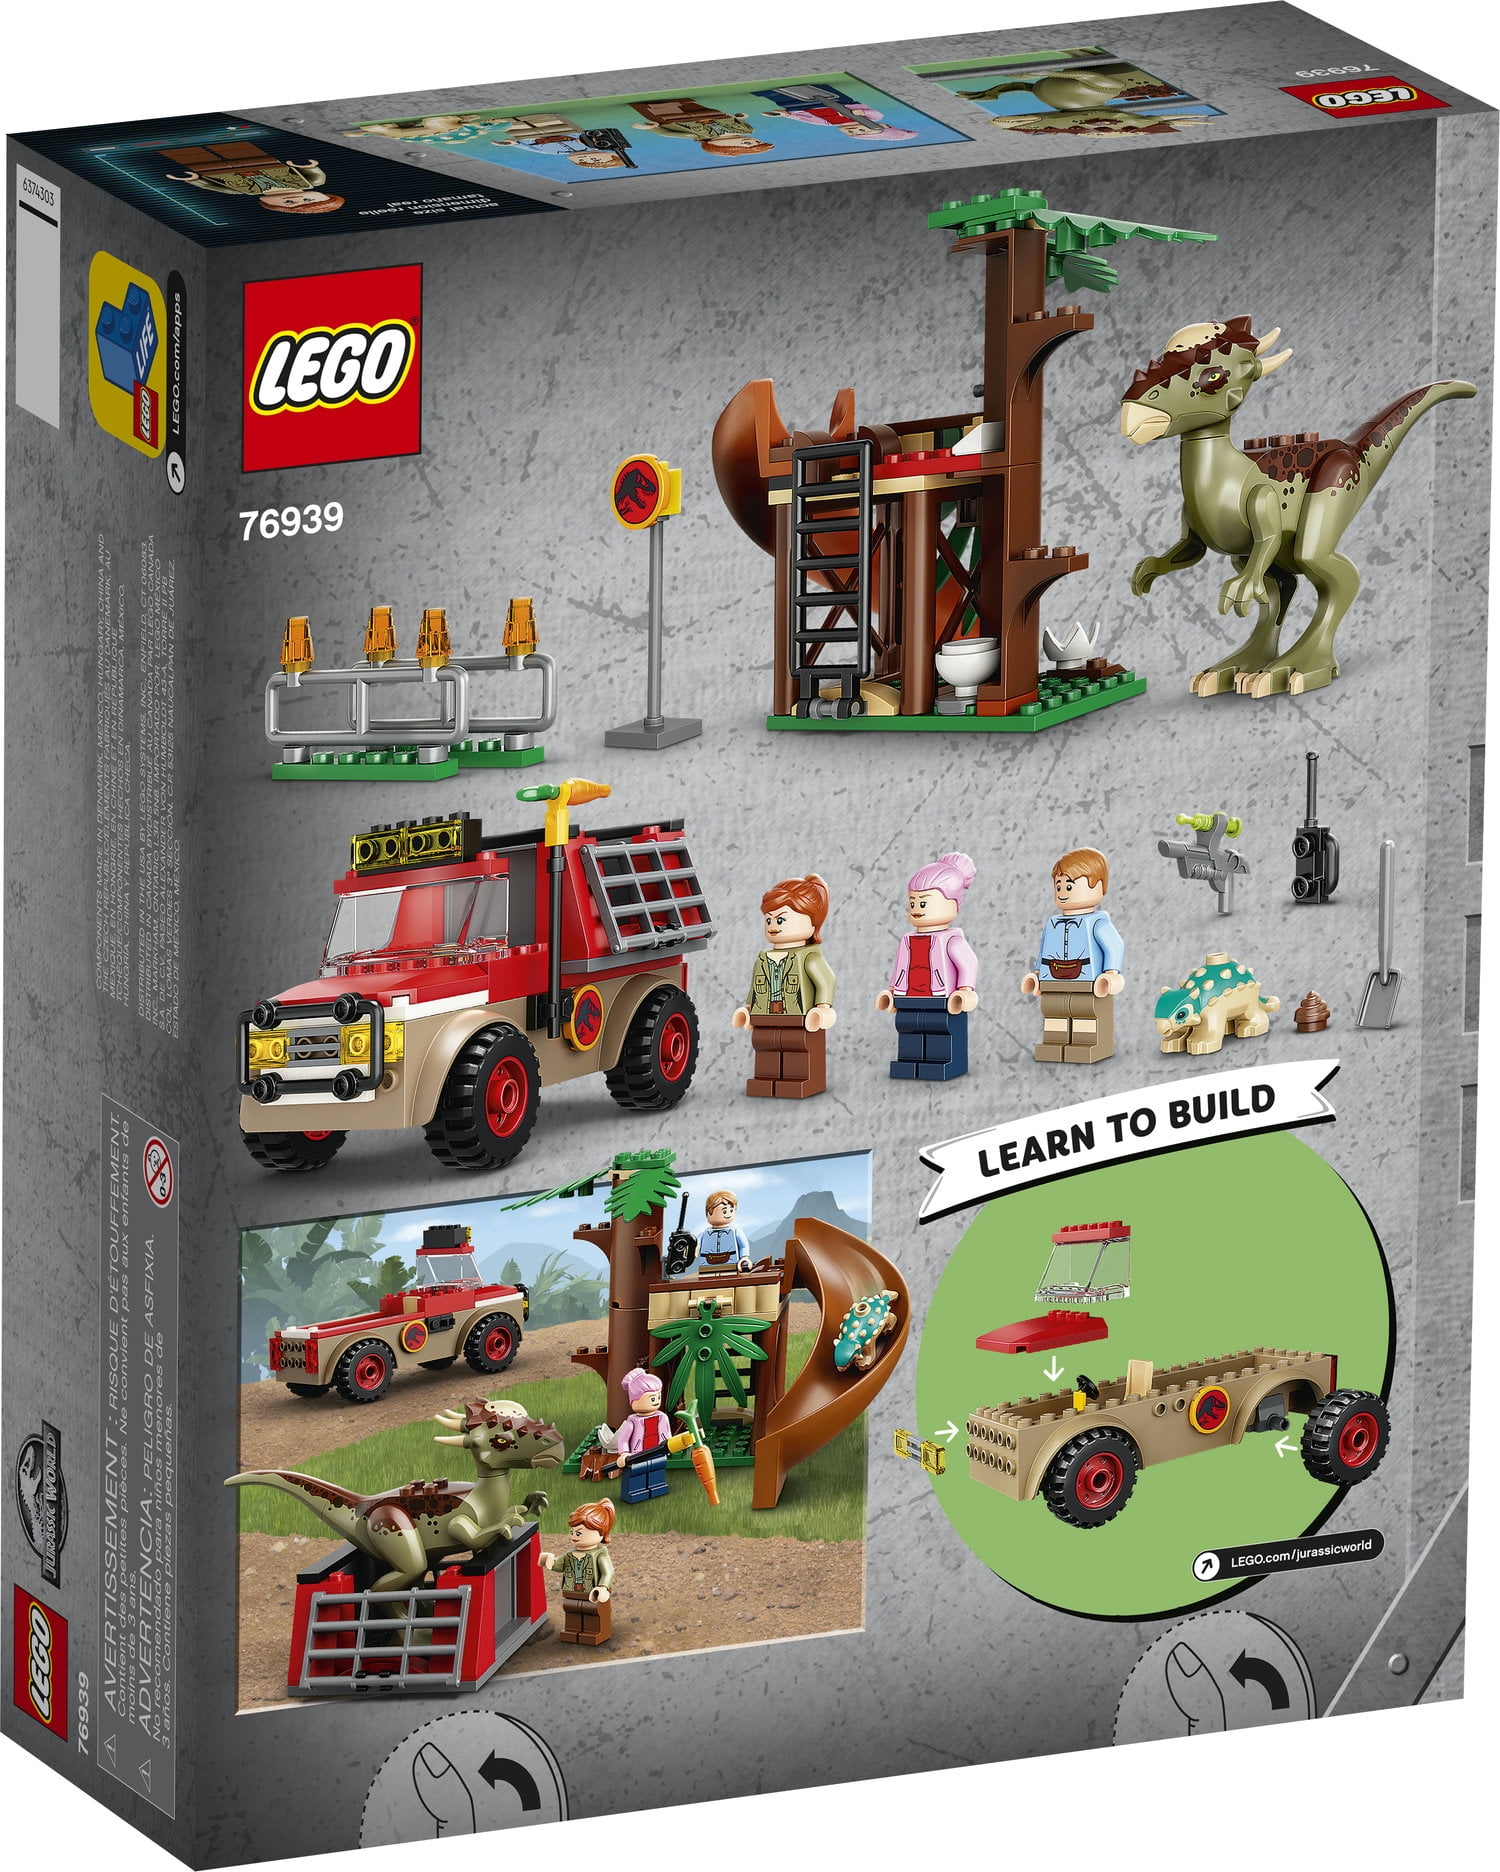 LEGO Jurassic World Stygimoloch Dinosaur Escape 76939 